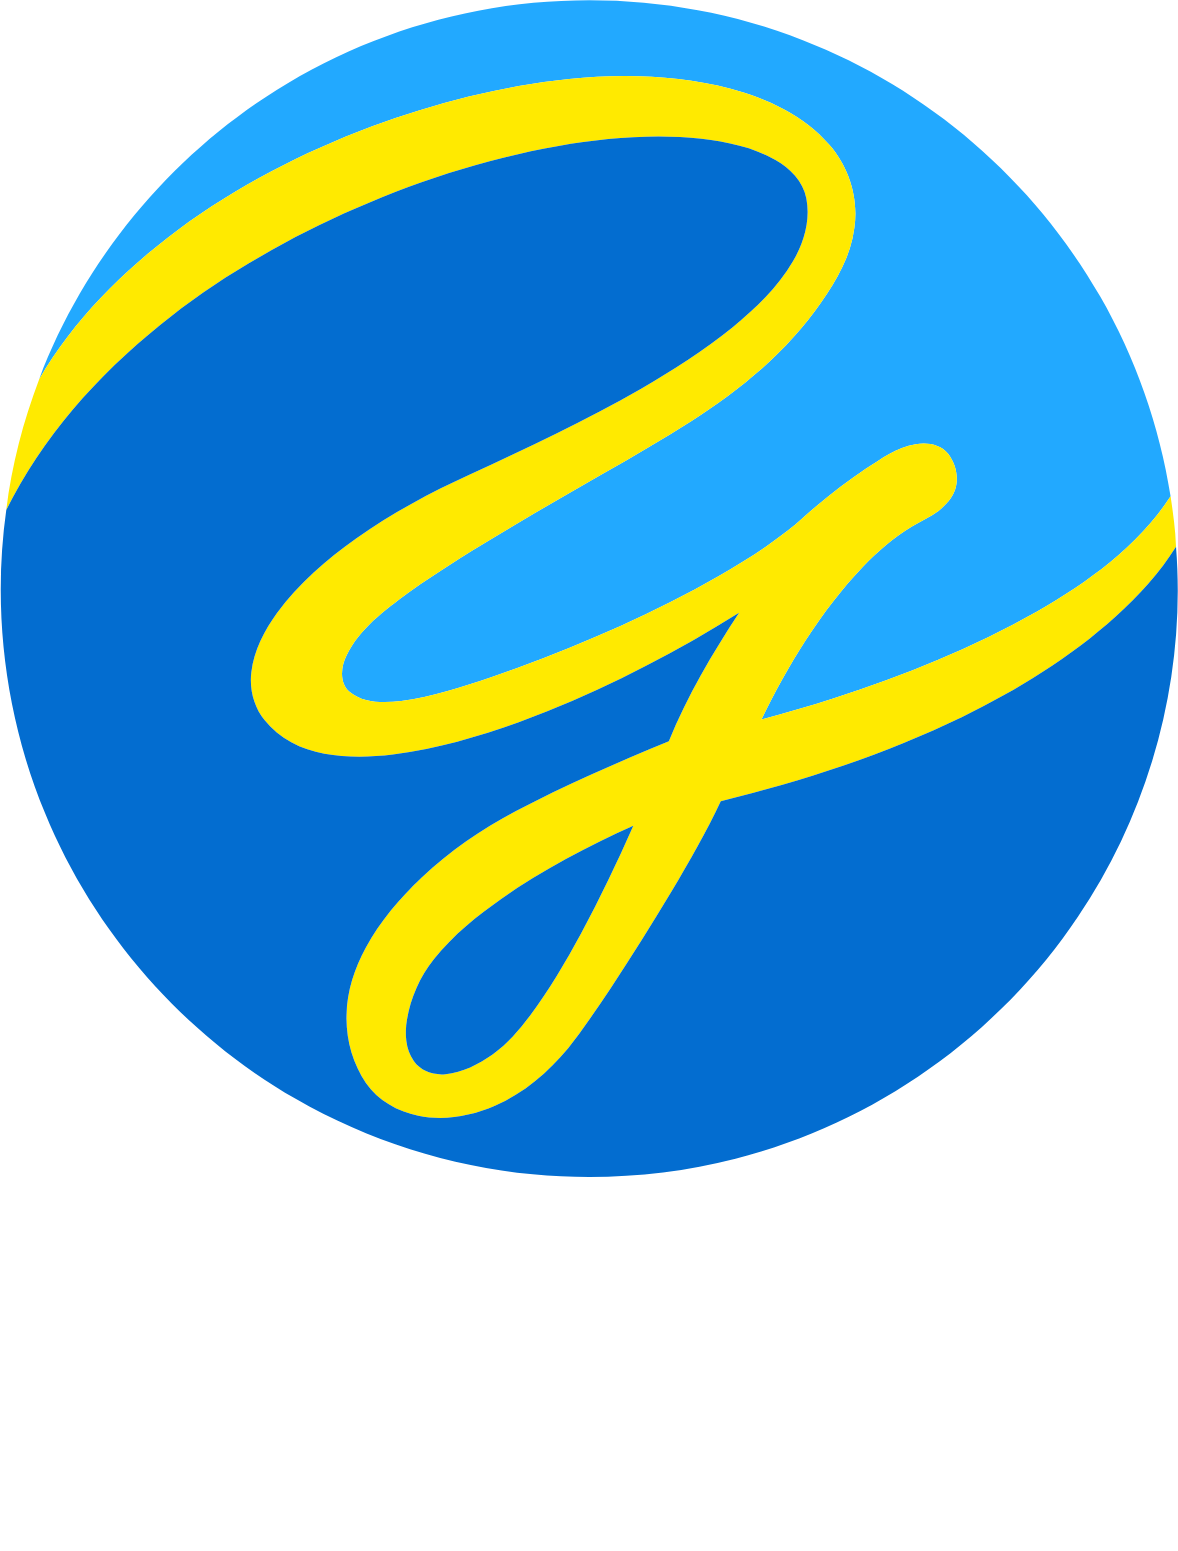 Yuke's logo large for dark backgrounds (transparent PNG)